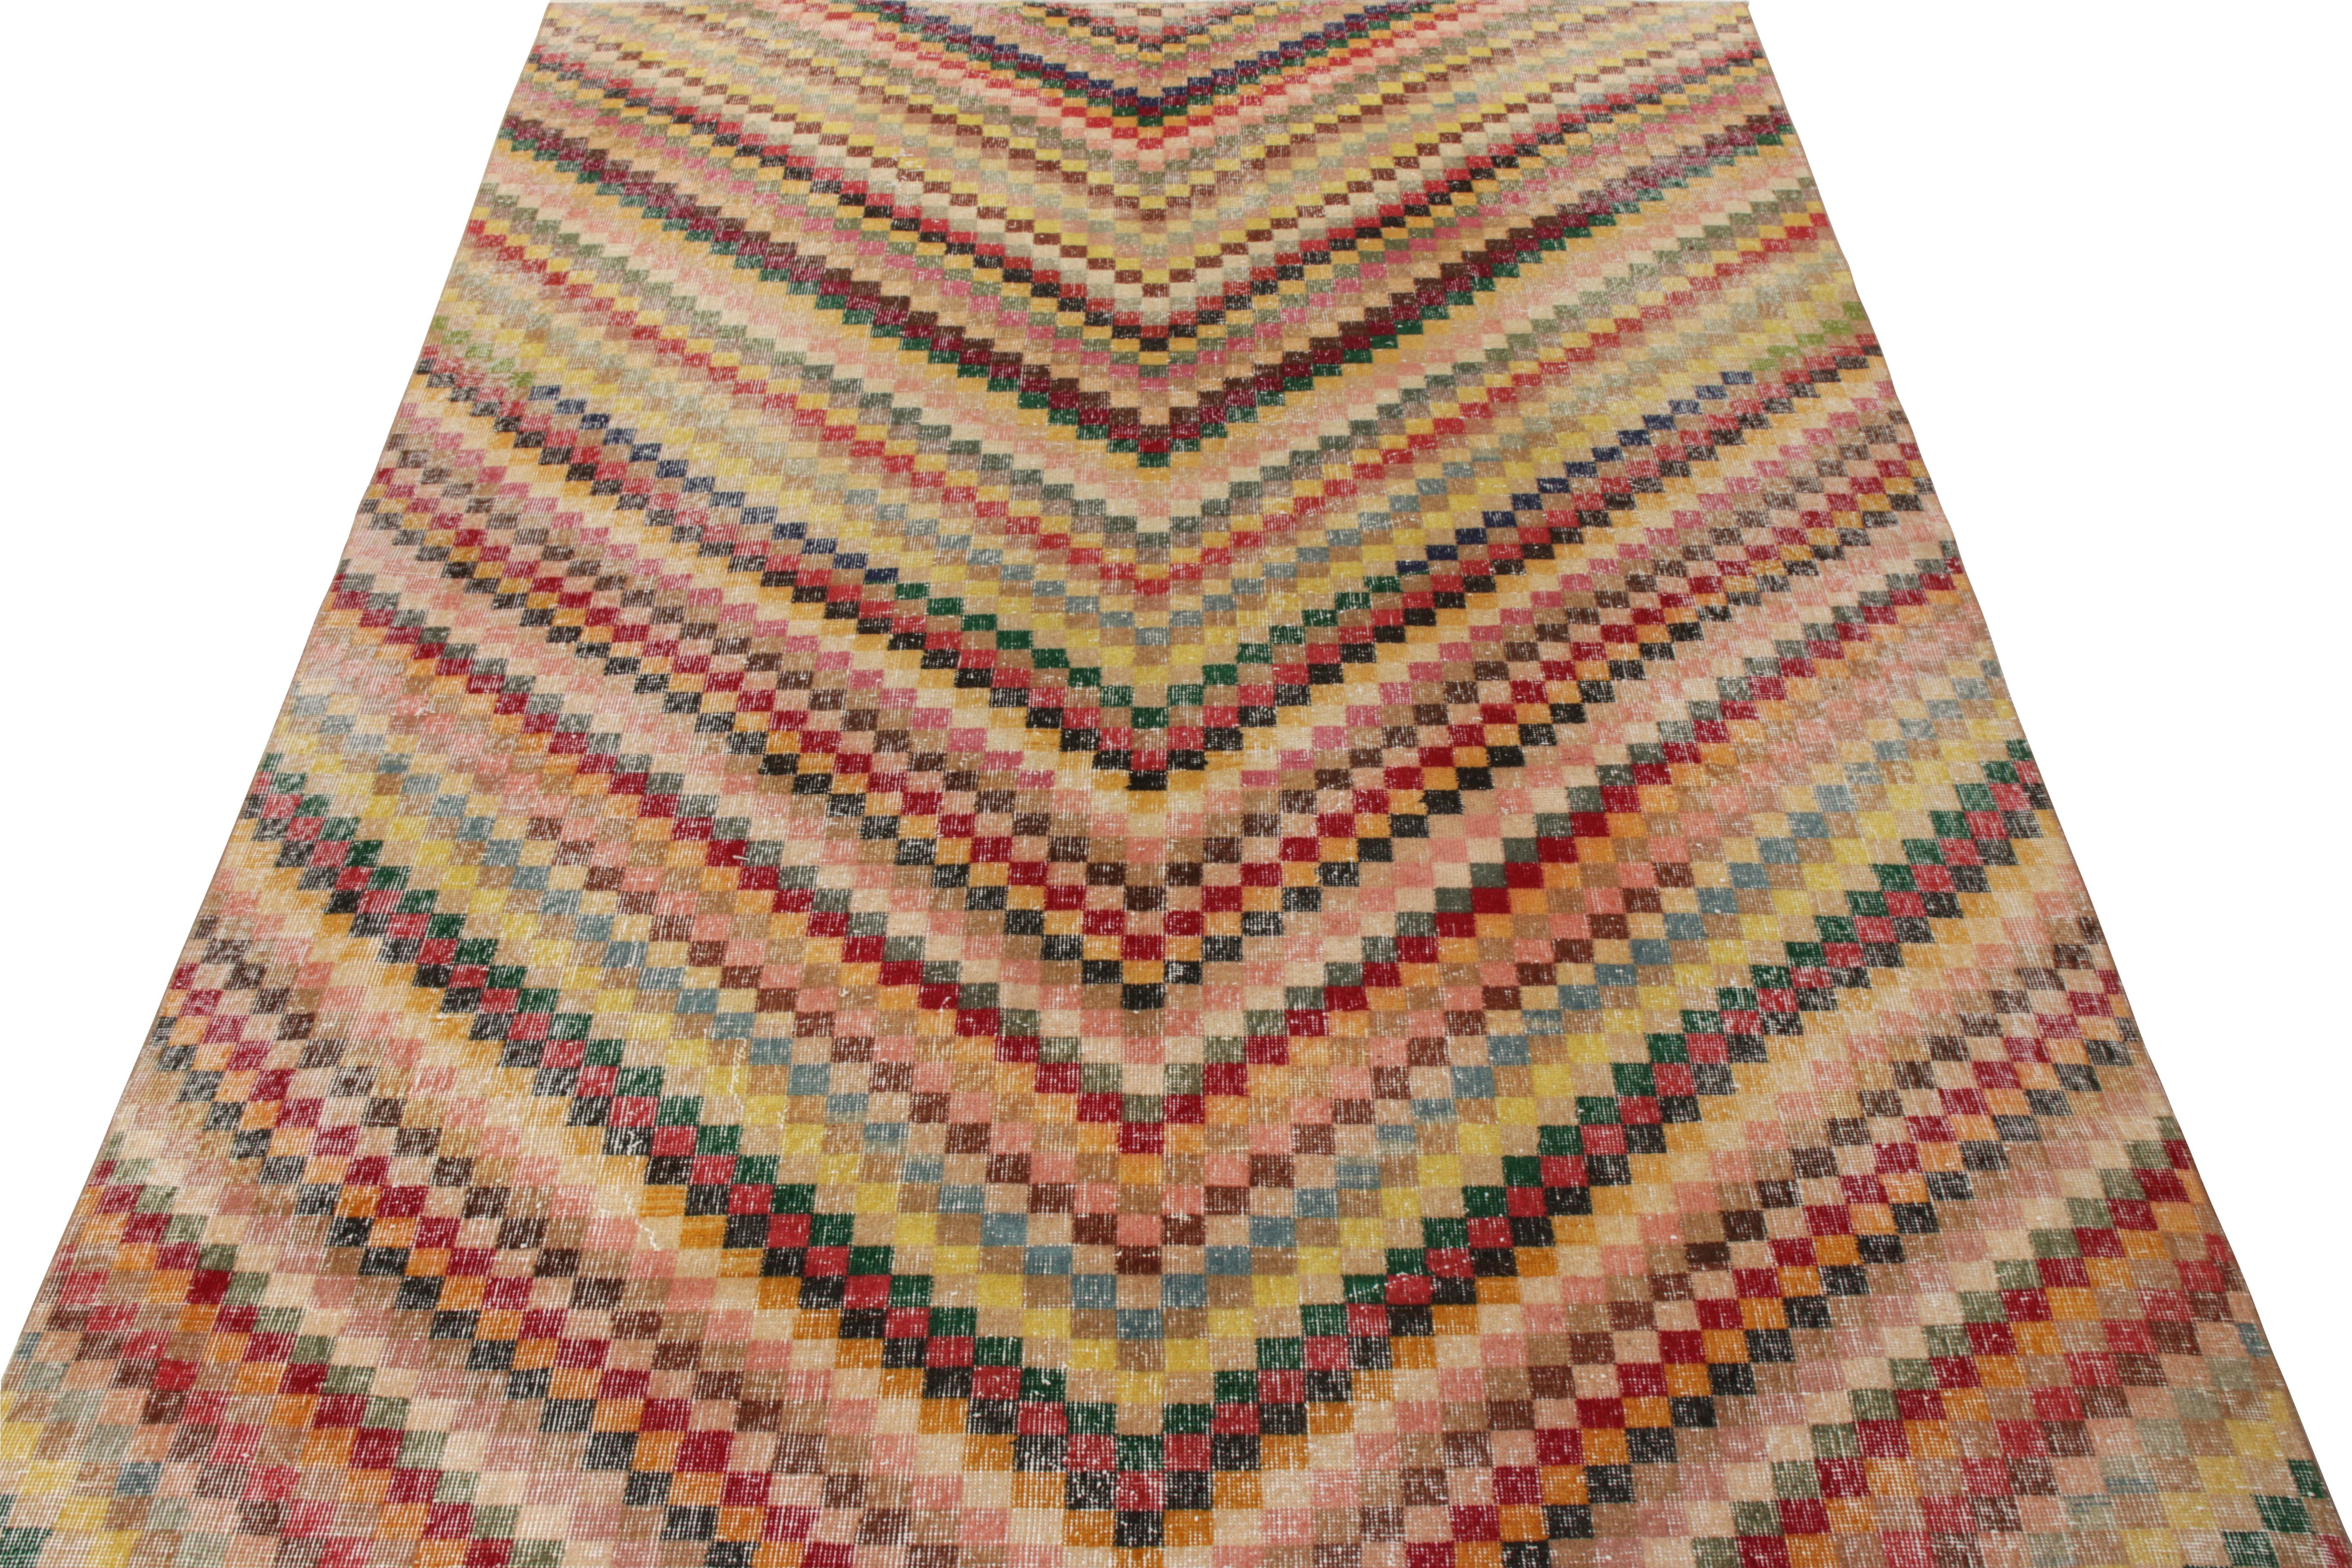 Hand-knotted in Turkey originating between 1960-1970, this vintage mid-century rug belongs to Rug & Kilim’s Mid-Century Pasha Collection that celebrates the Turkish icon and multidisciplinary designer Zeki Müren with Josh’s hand picked favorites